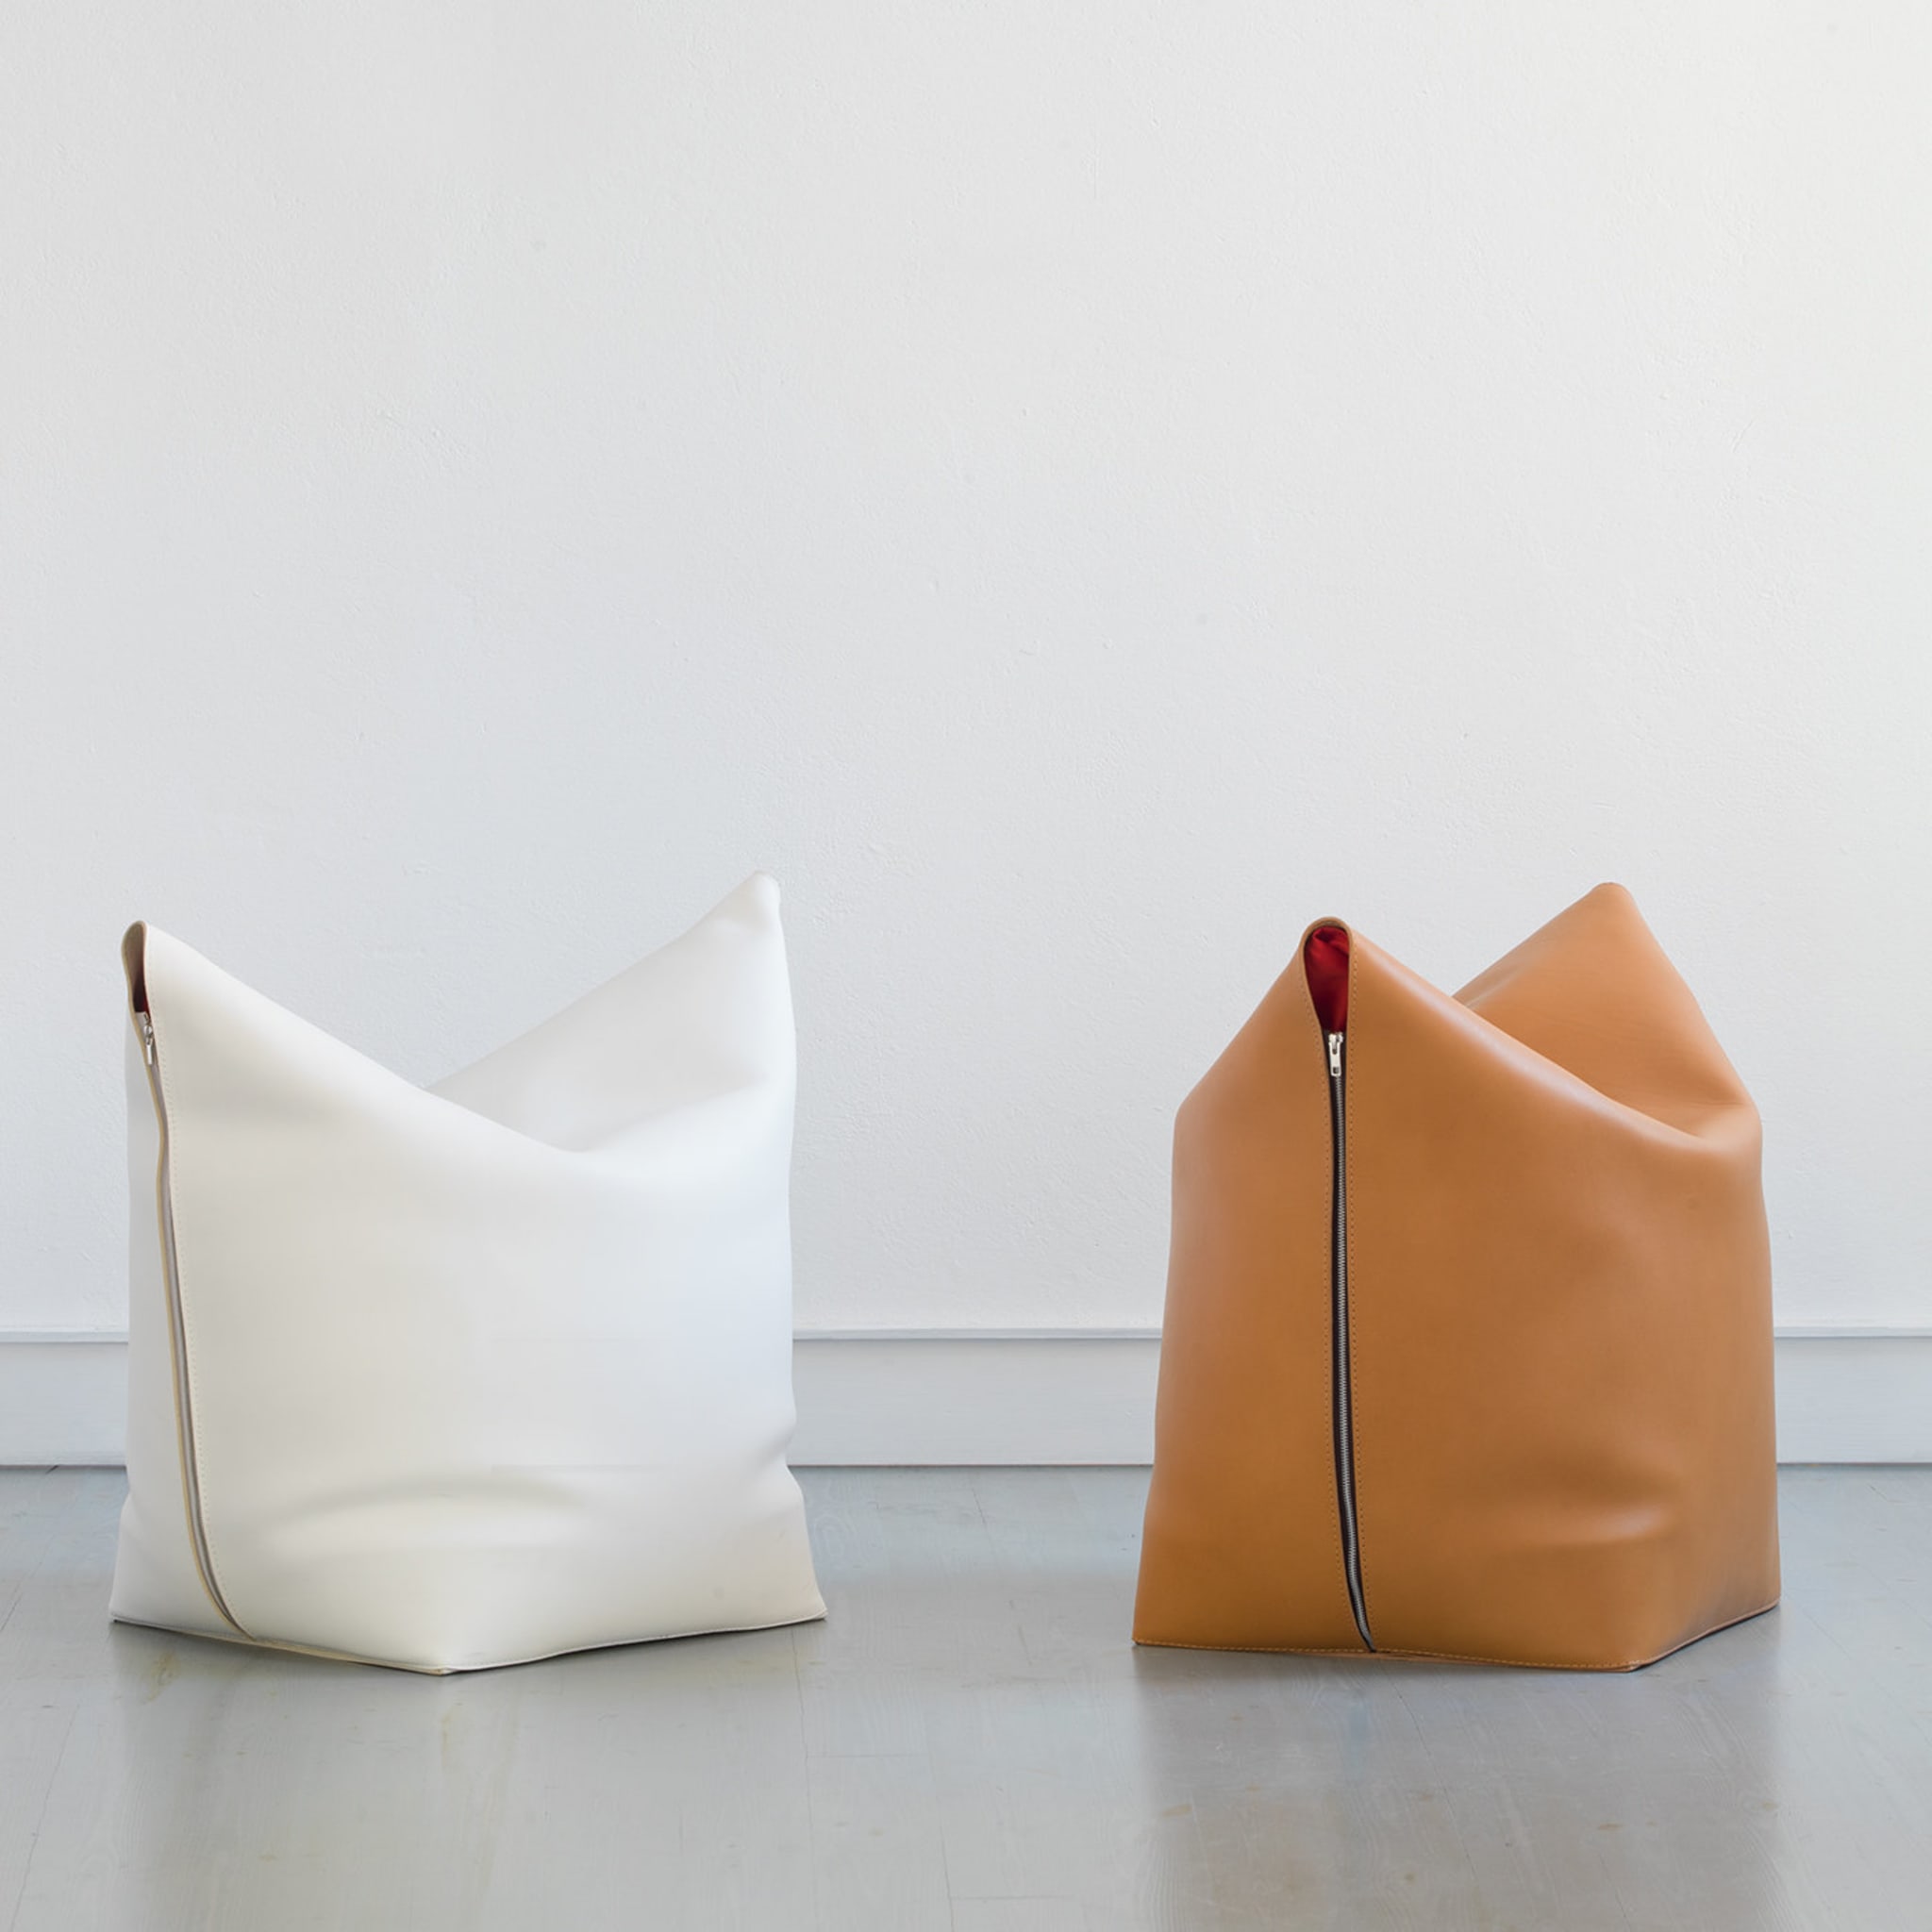 Mao Orange Leather Bag Chair by Viola Tonucci - Alternative view 2